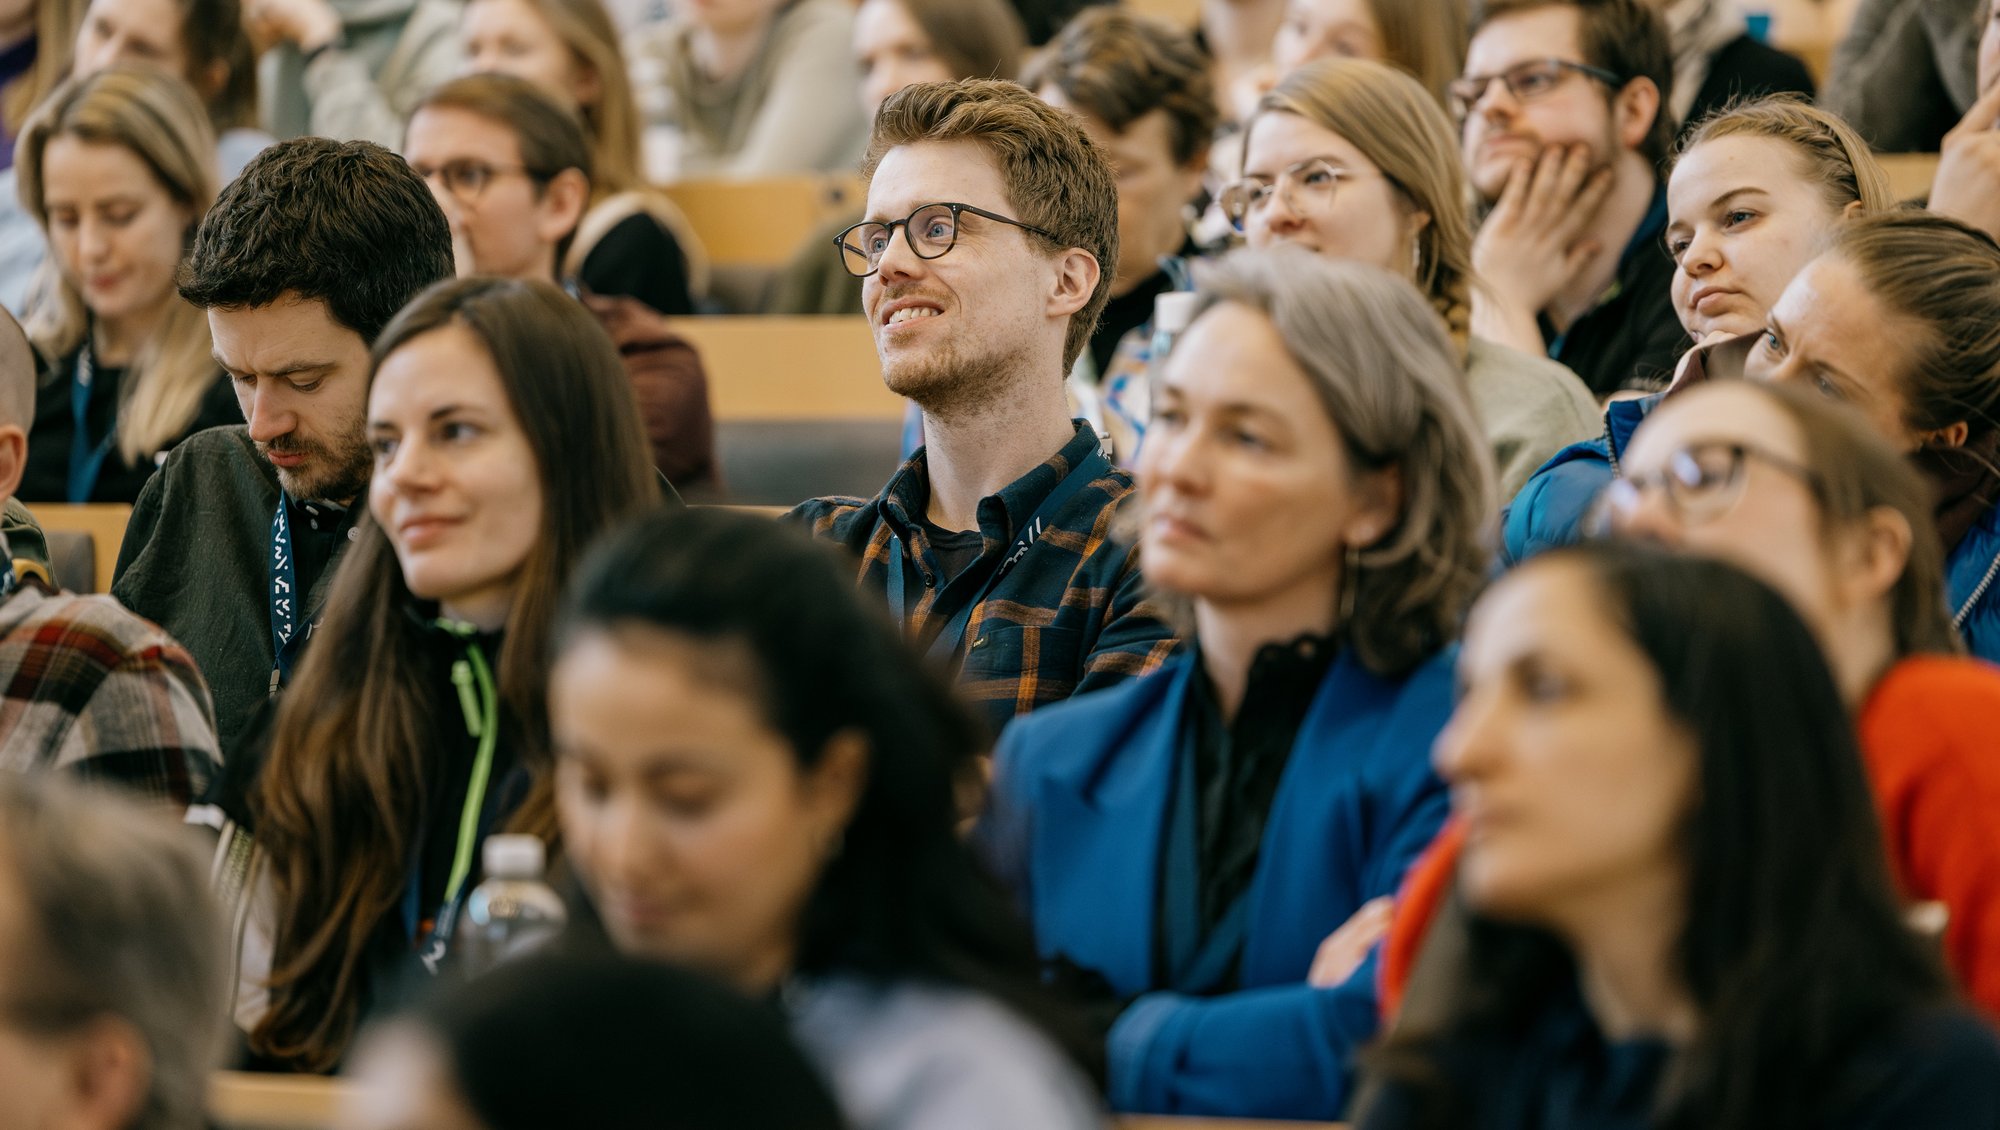 The attendees listen attentively. Photo: Jens Hartmann Schmidt, AU Photo.